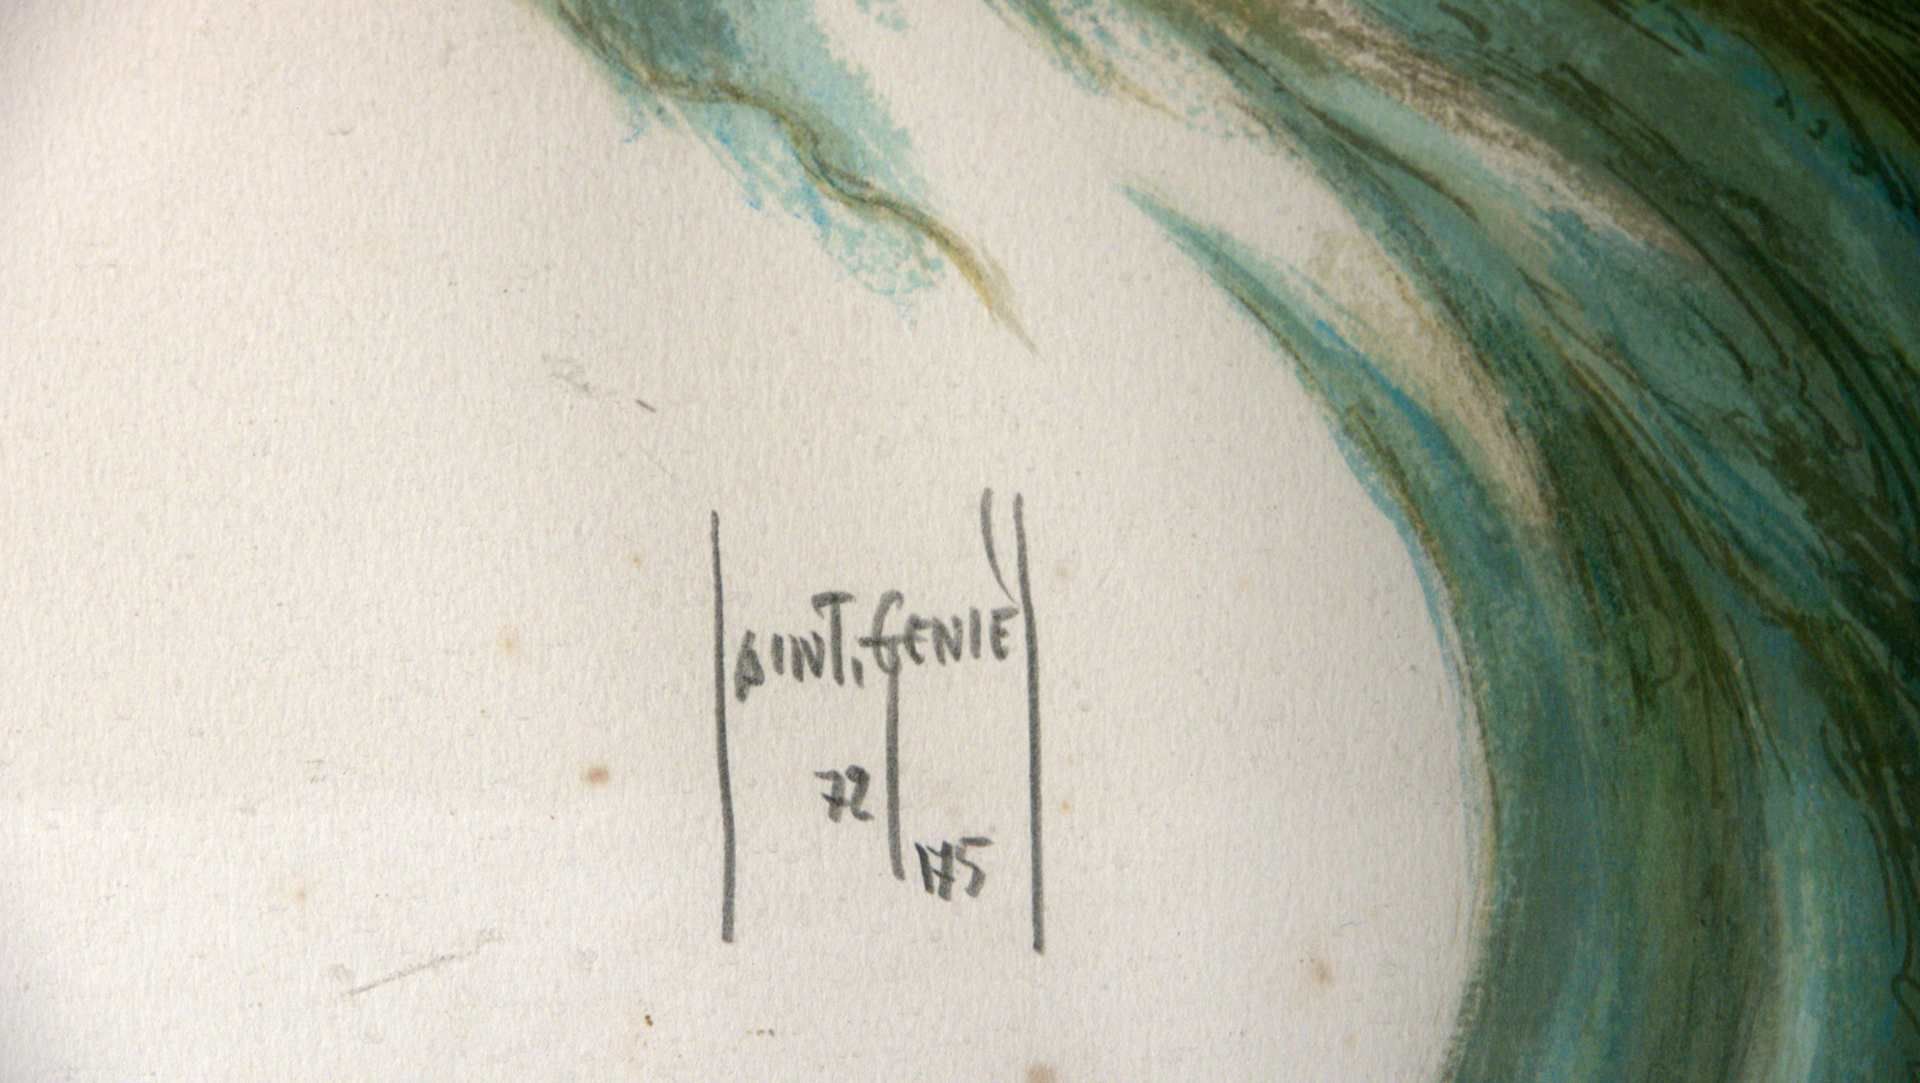 SAINT GENIES, "Frauenkopf", Lithographie, sig.72/175, ca. 56 x 76 cm - Image 2 of 2